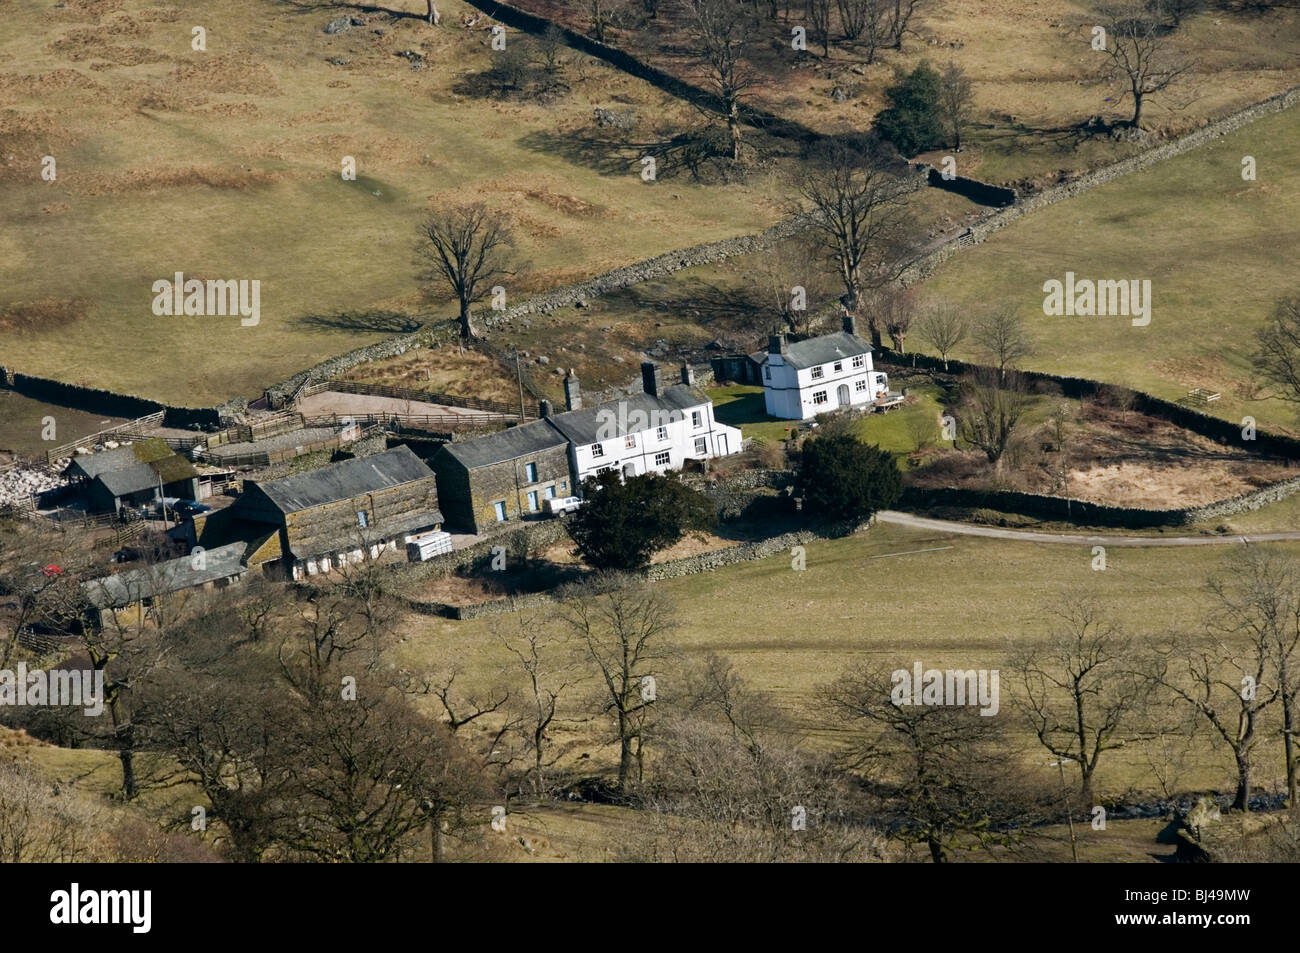 Troutbeck Park Farm, Cumbria en el Lake District inglés era propiedad de Beatrix Potter. Fotografiado desde la vía pública. Foto de stock